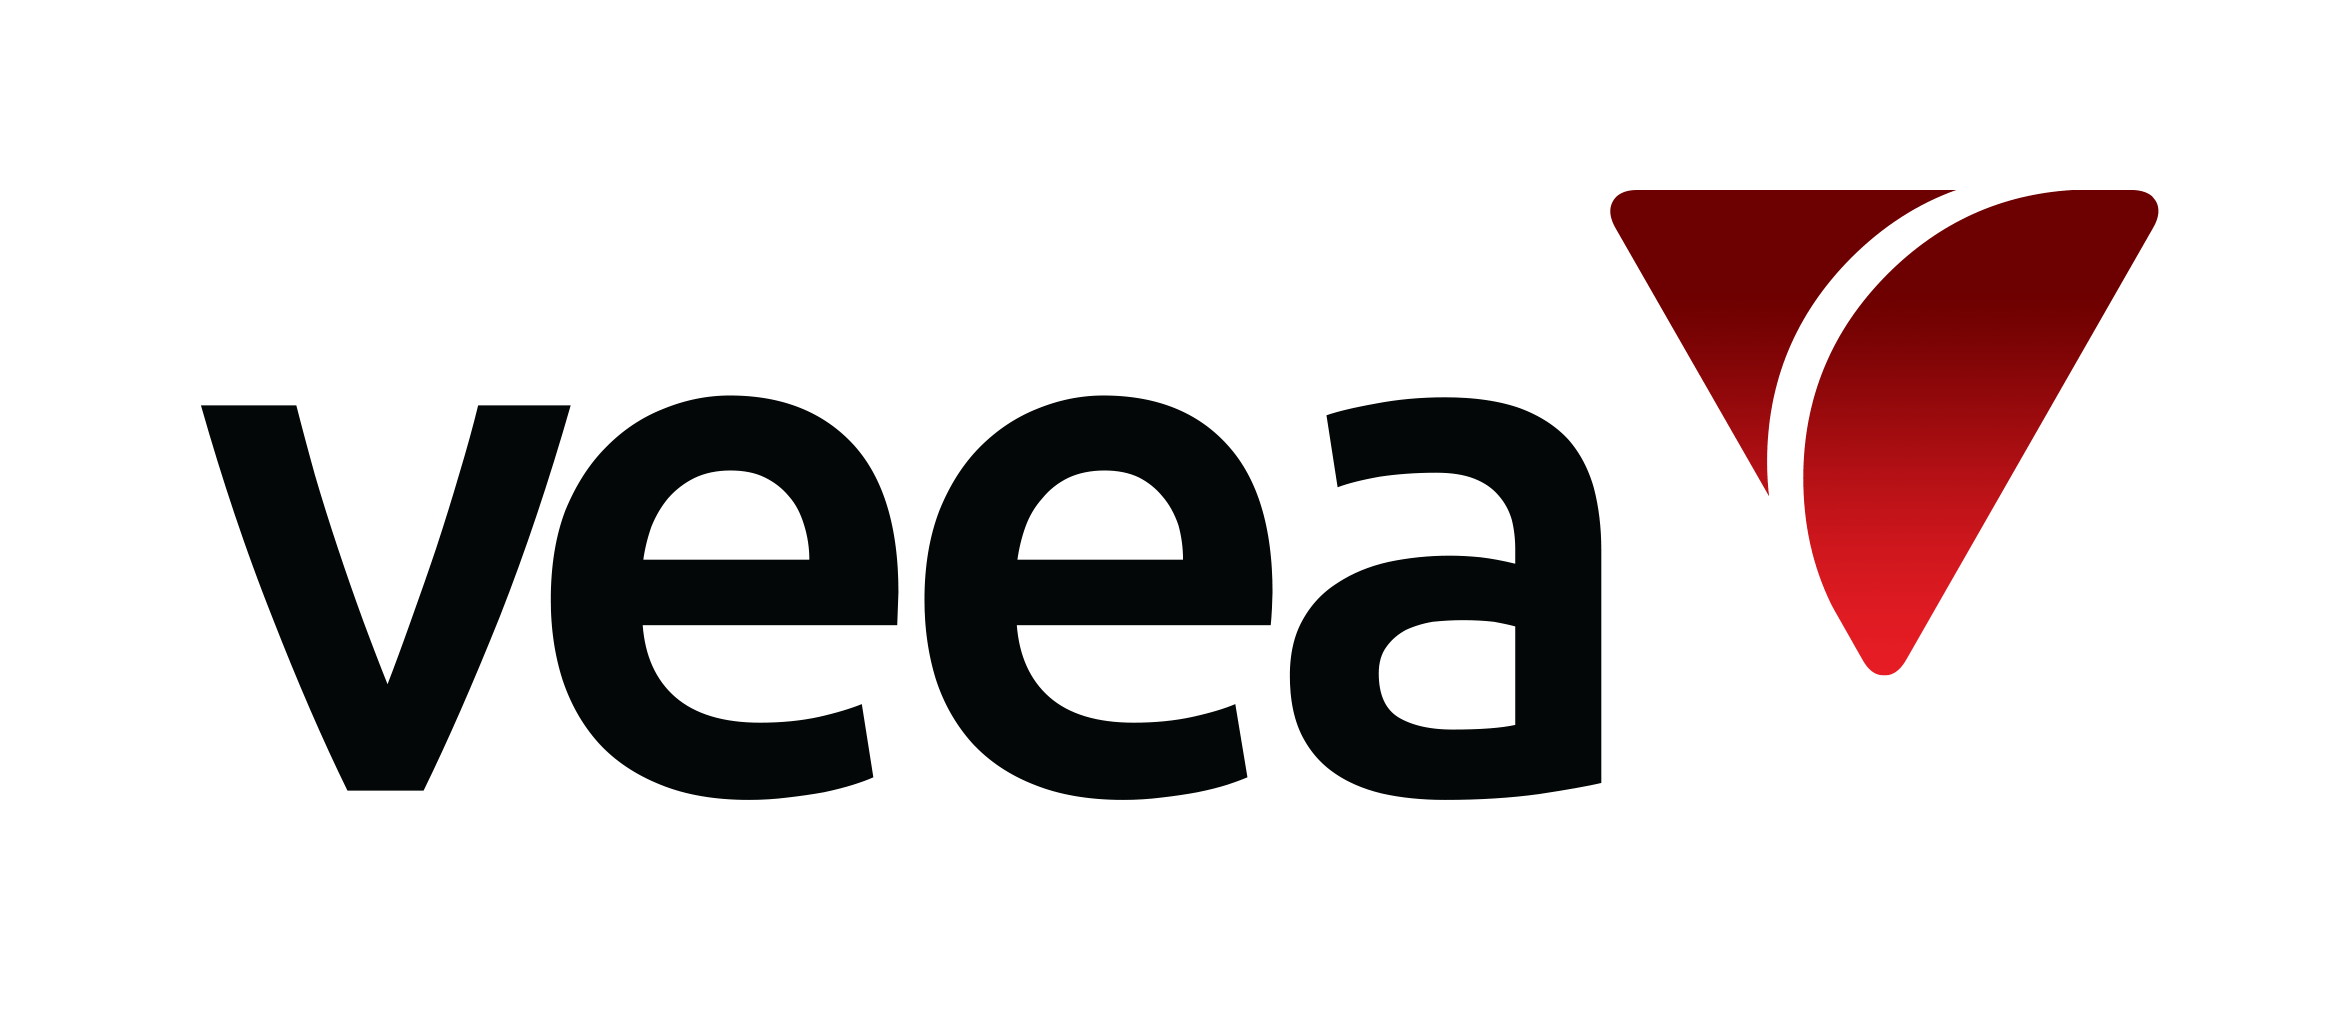 Google Inc Logo - Media and Press Kit - Veea Inc. - Makers of Veea and VeeaConnect